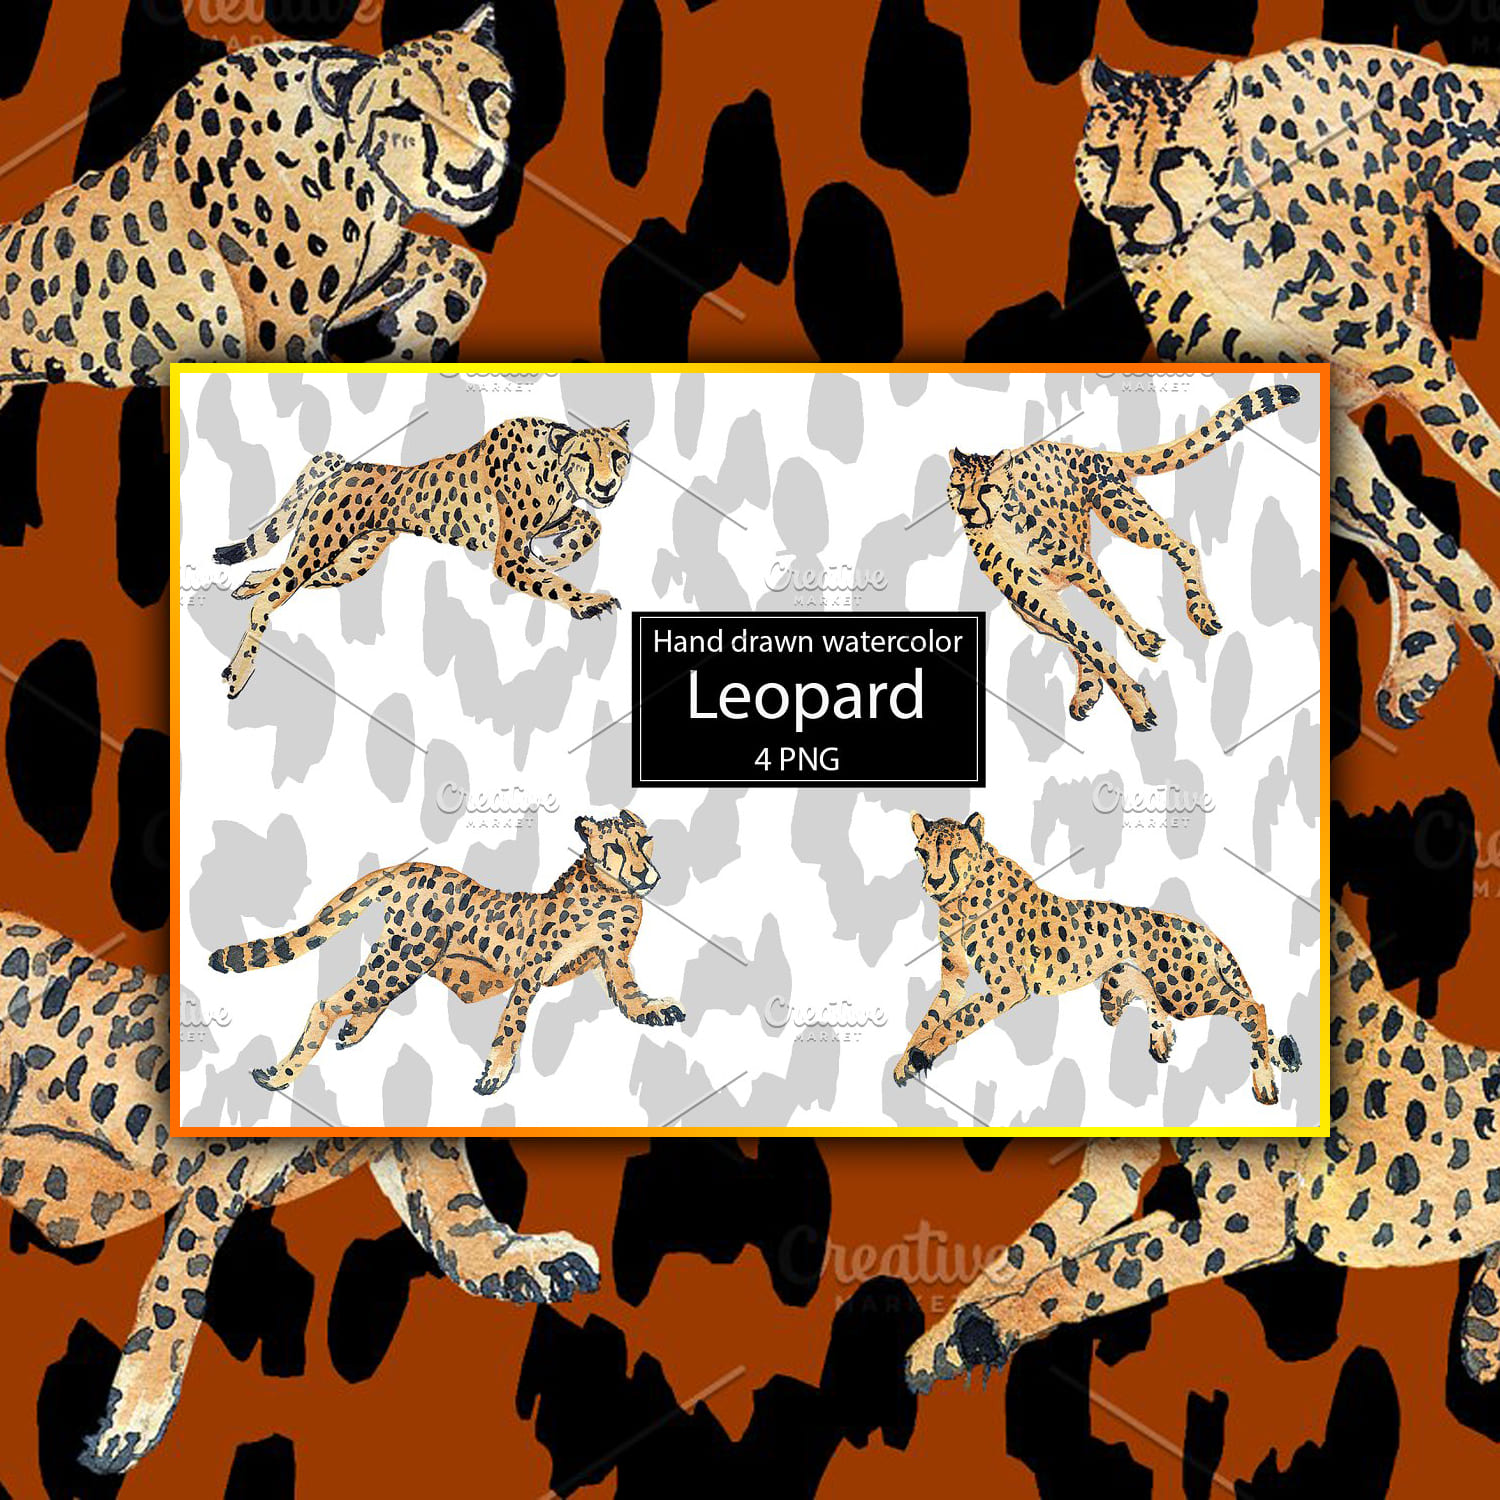 Watercolor Leopard Cover.